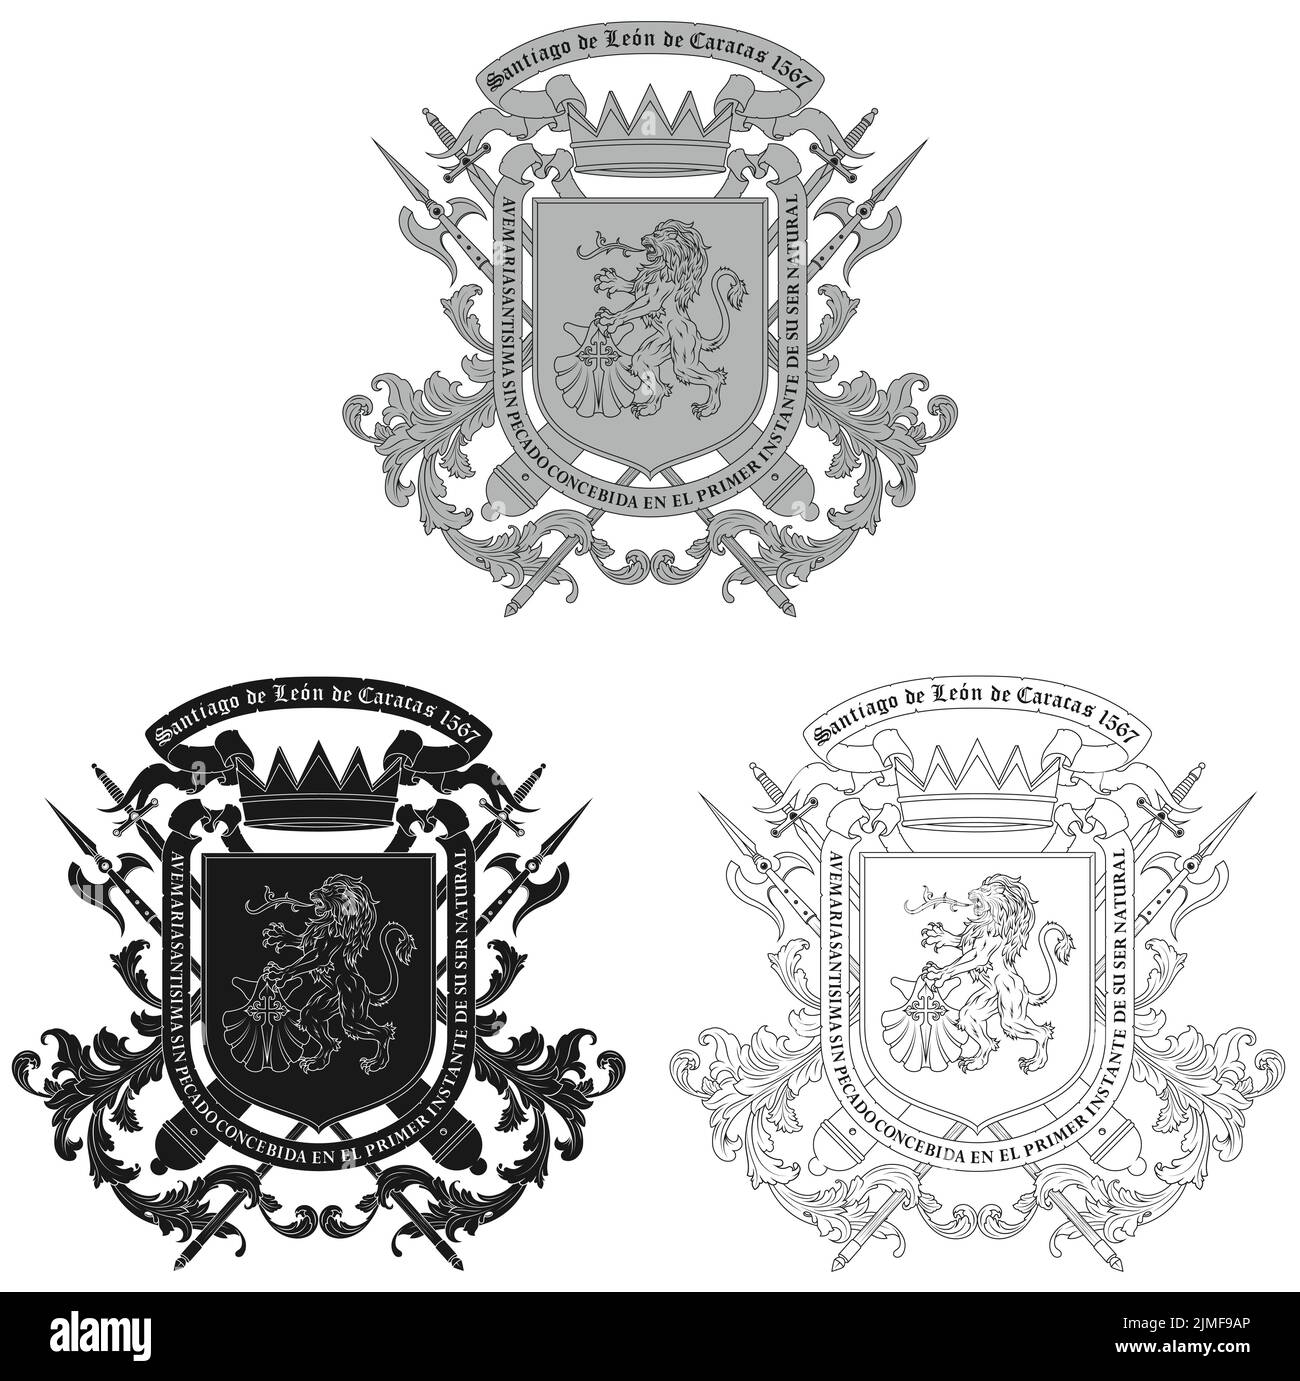 Coat of arms of the city of Caracas Venezuela, coat of arms of Santiago de León de Caracas was granted by King Philip II of Spain Stock Vector